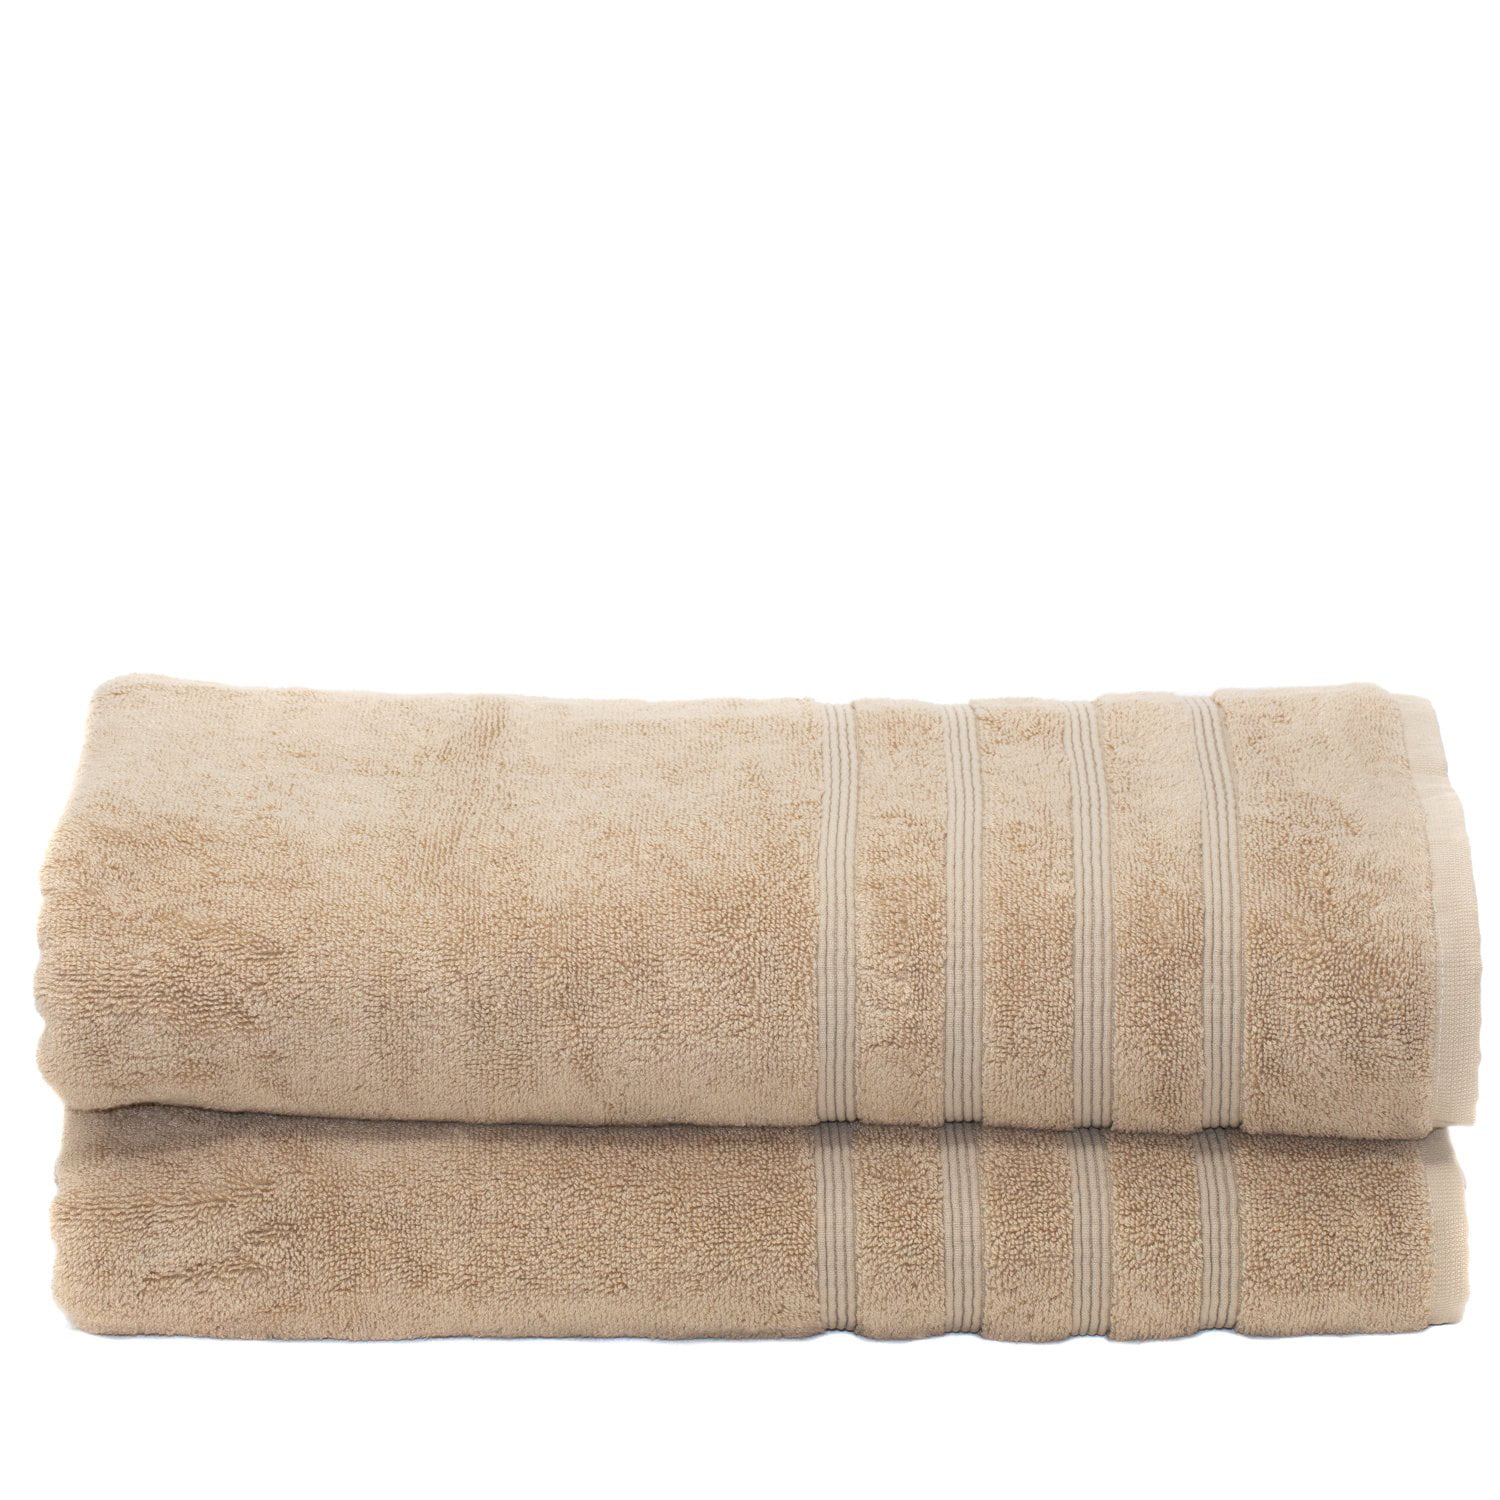 New in the UK Luxury Turkey Towel 100% Bamboo Fiber Hand Bath Super Soft Natural 